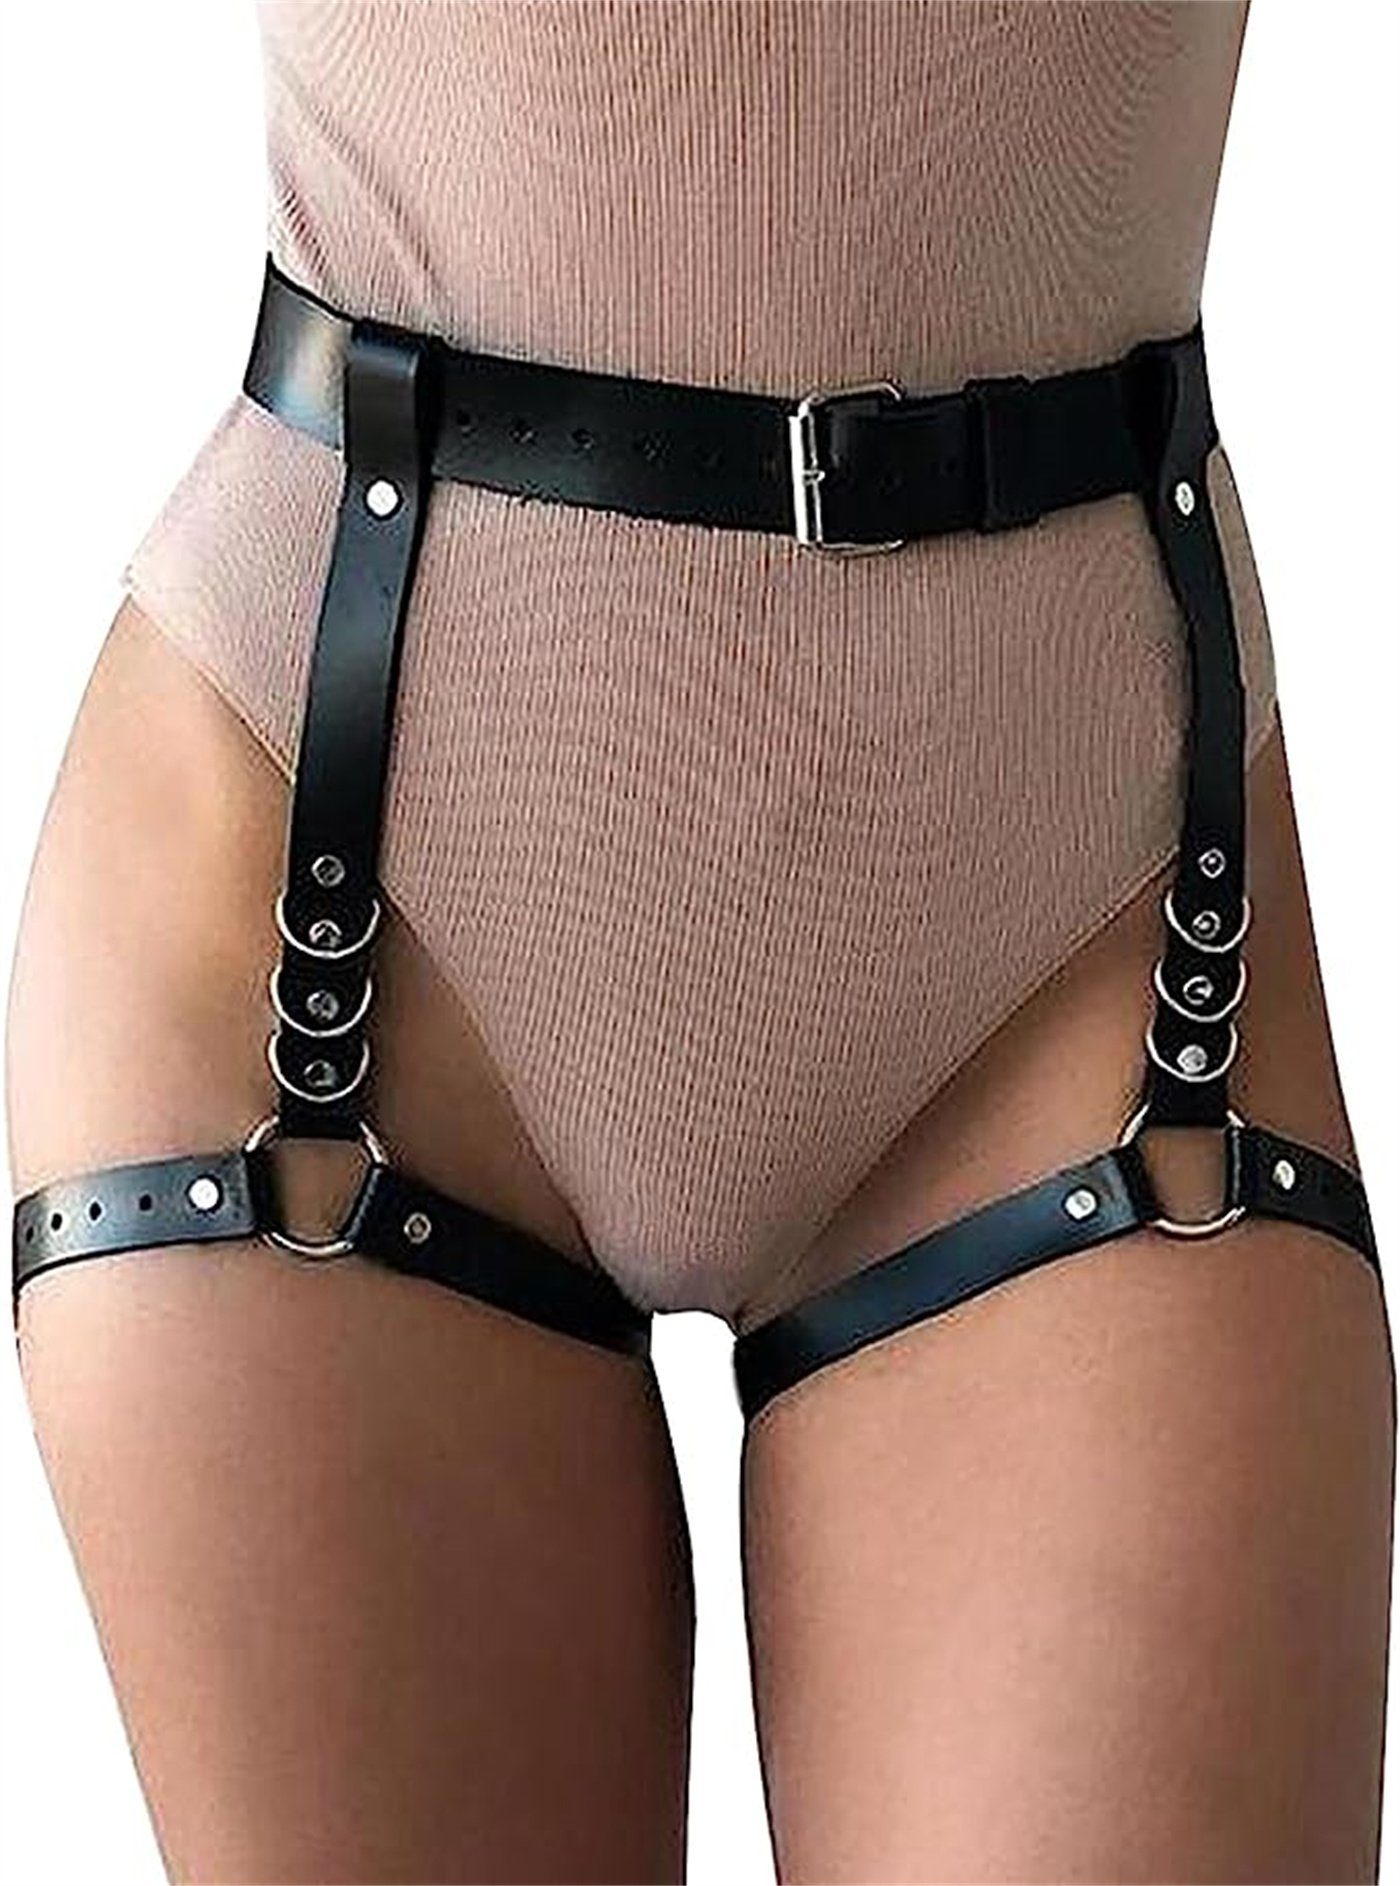 Frauen inspink Ketten Leder Gürtel Hüfte Kettengürtel Harness Sexy mit